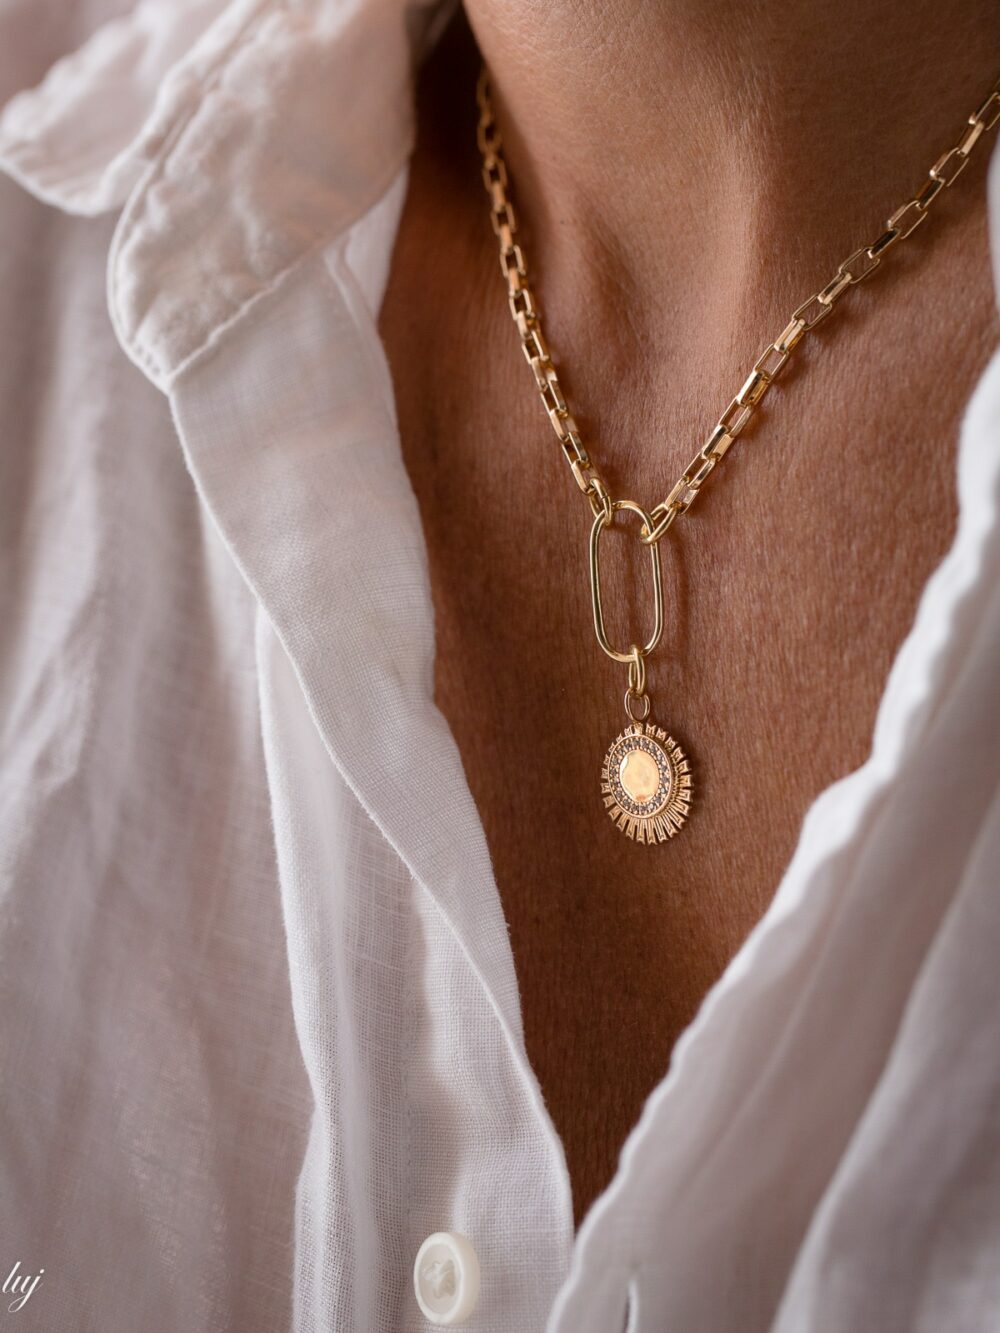 clara-necklace-luj-paris-jewels